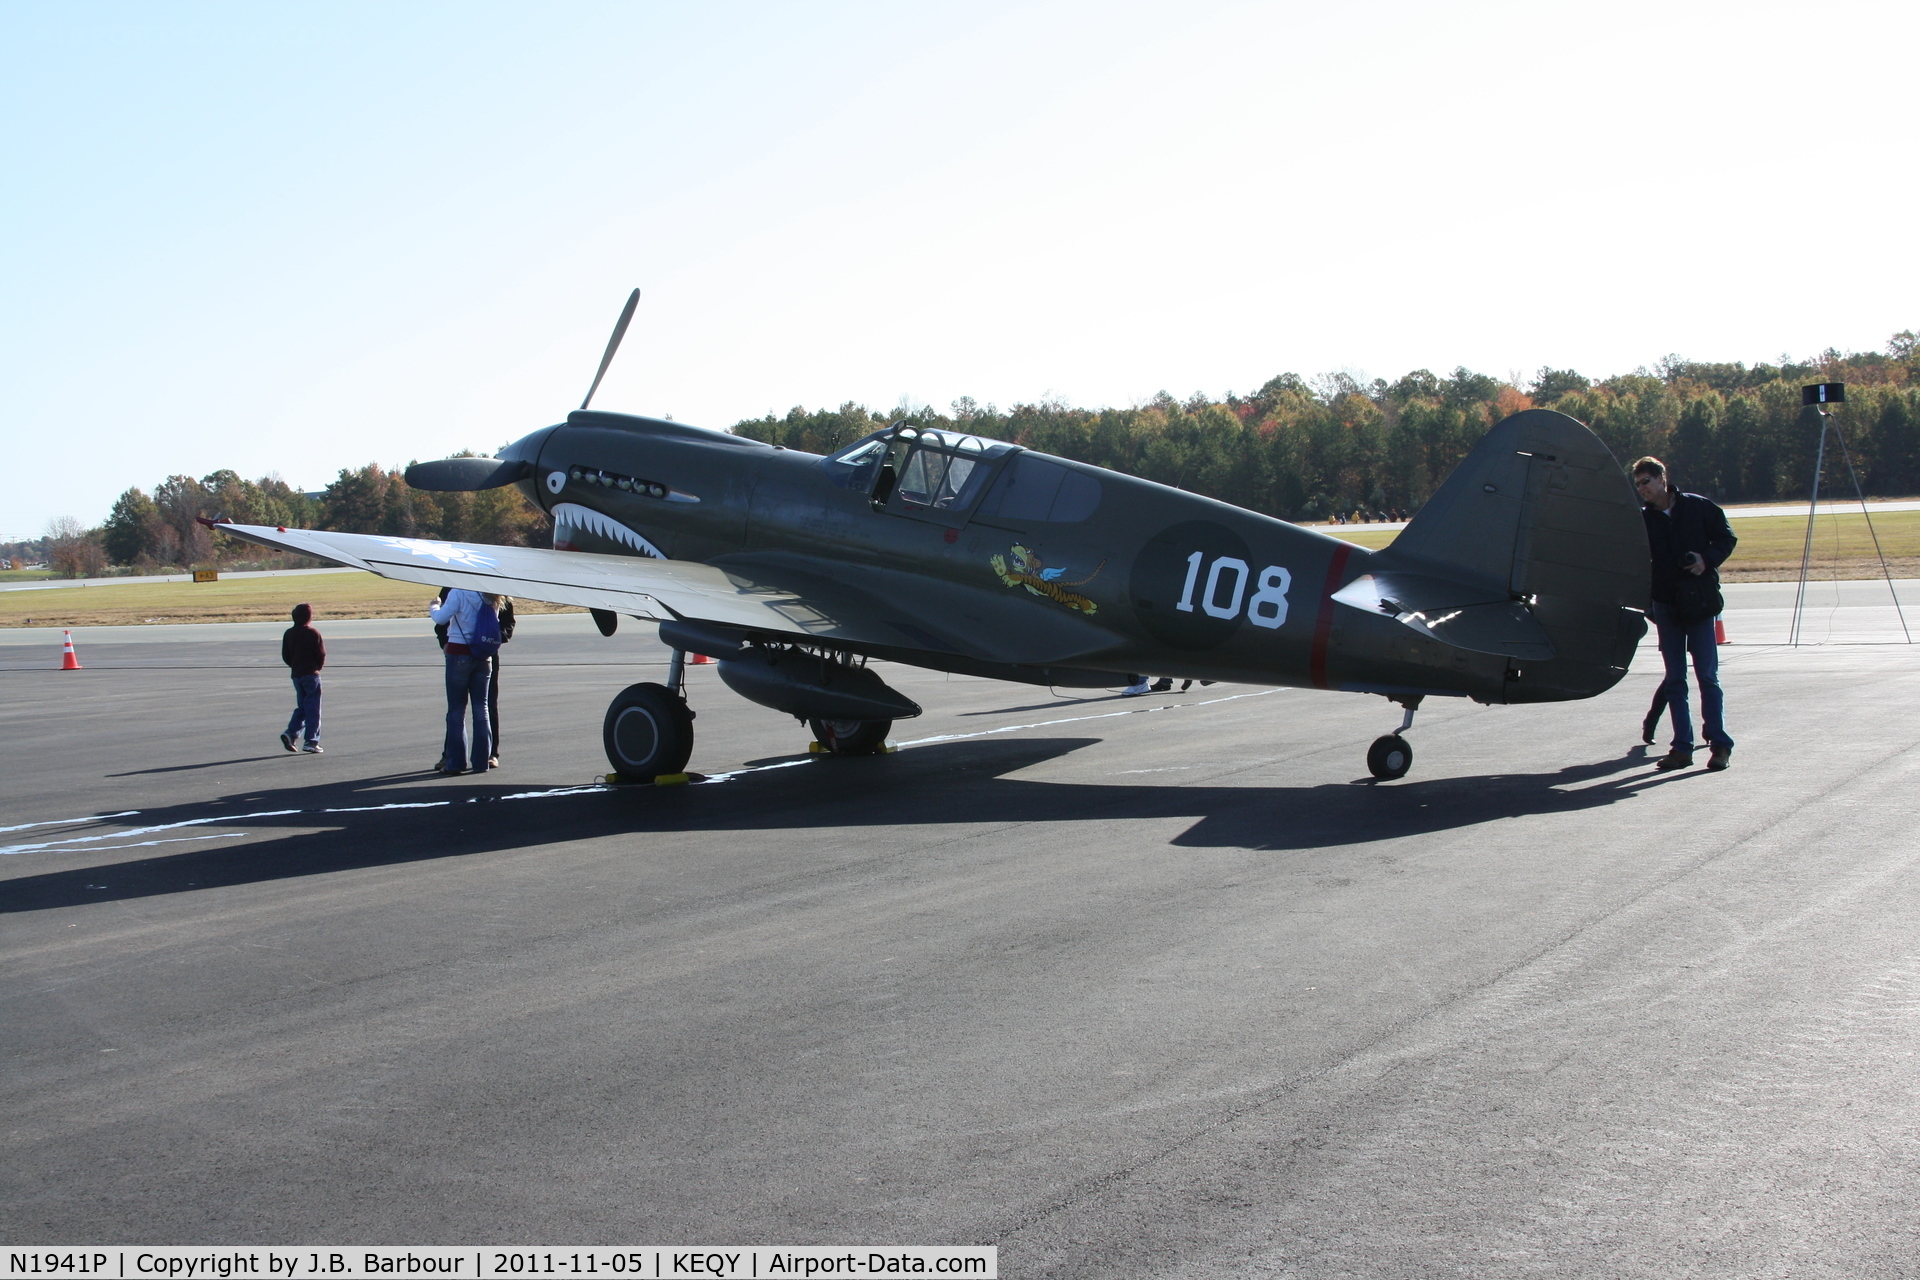 N1941P, 1941 Curtiss P-40E C/N 1025, P-40 wasn't able to get a tail number